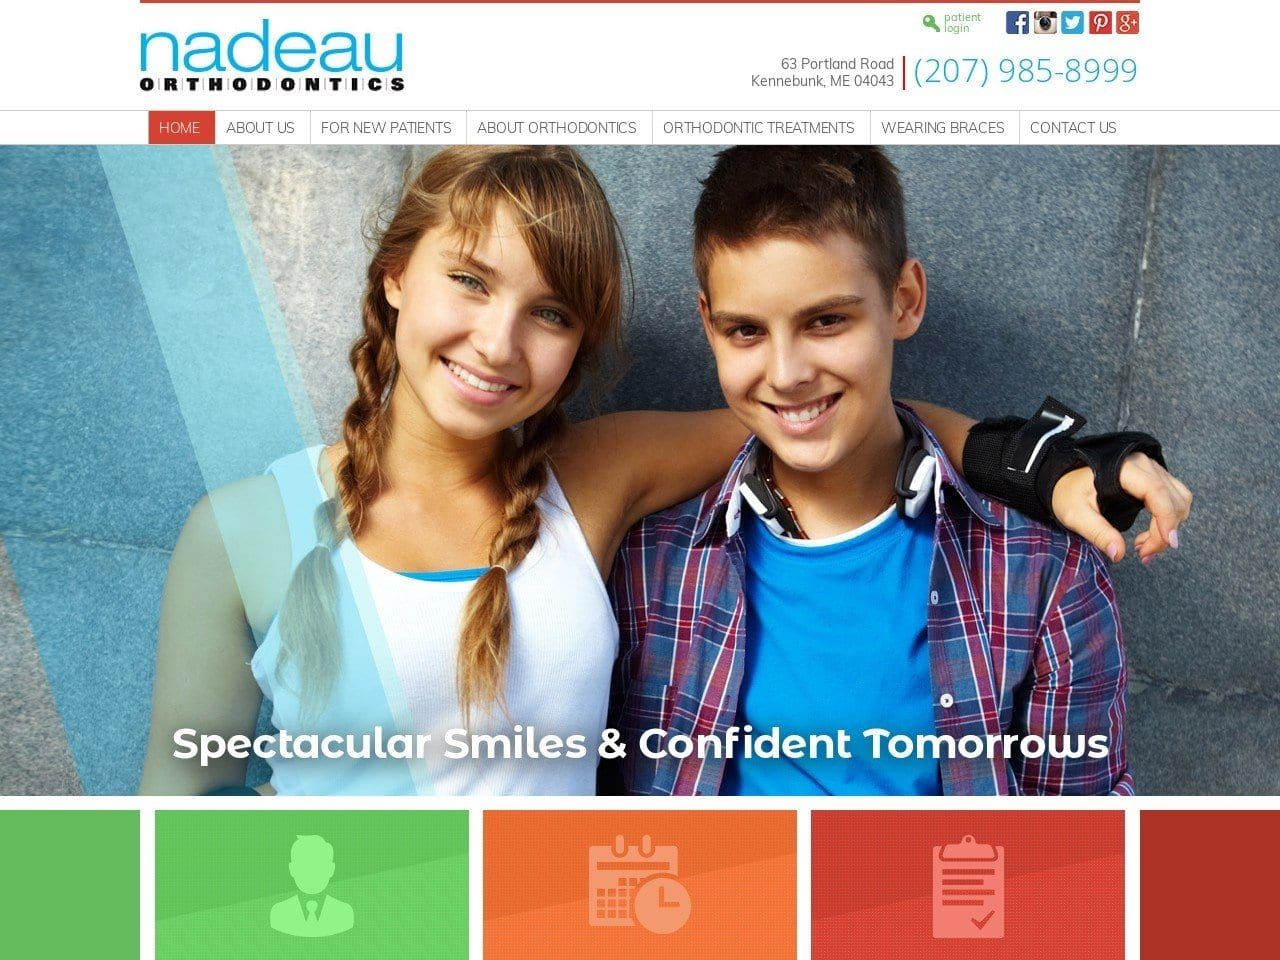 Nadeau Orthodontics Website Screenshot from nadeauortho.com